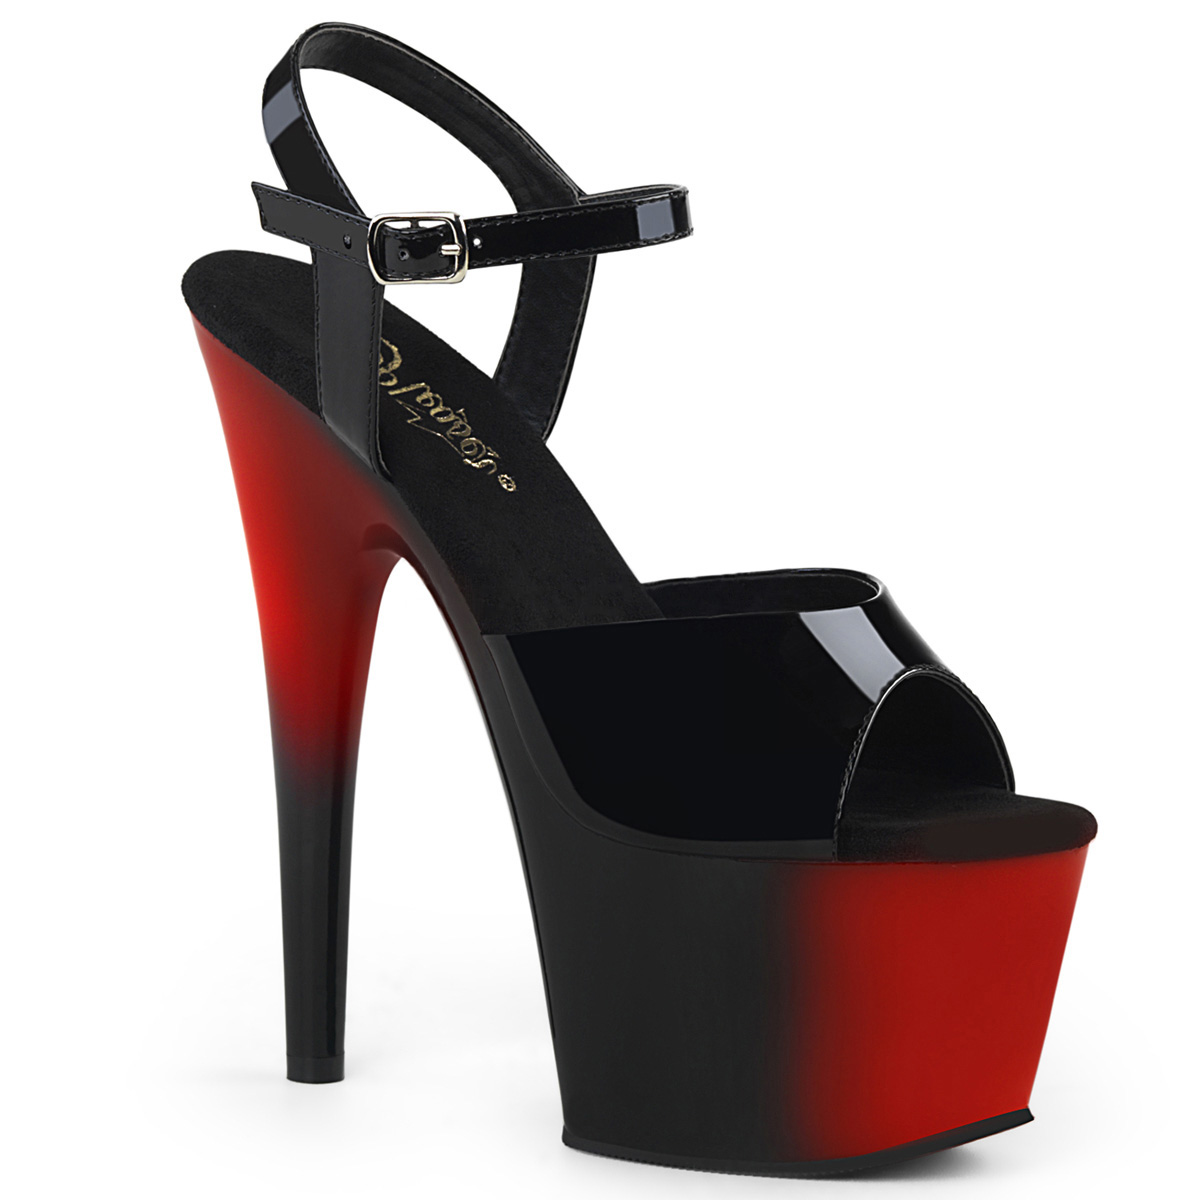 red platforms heels